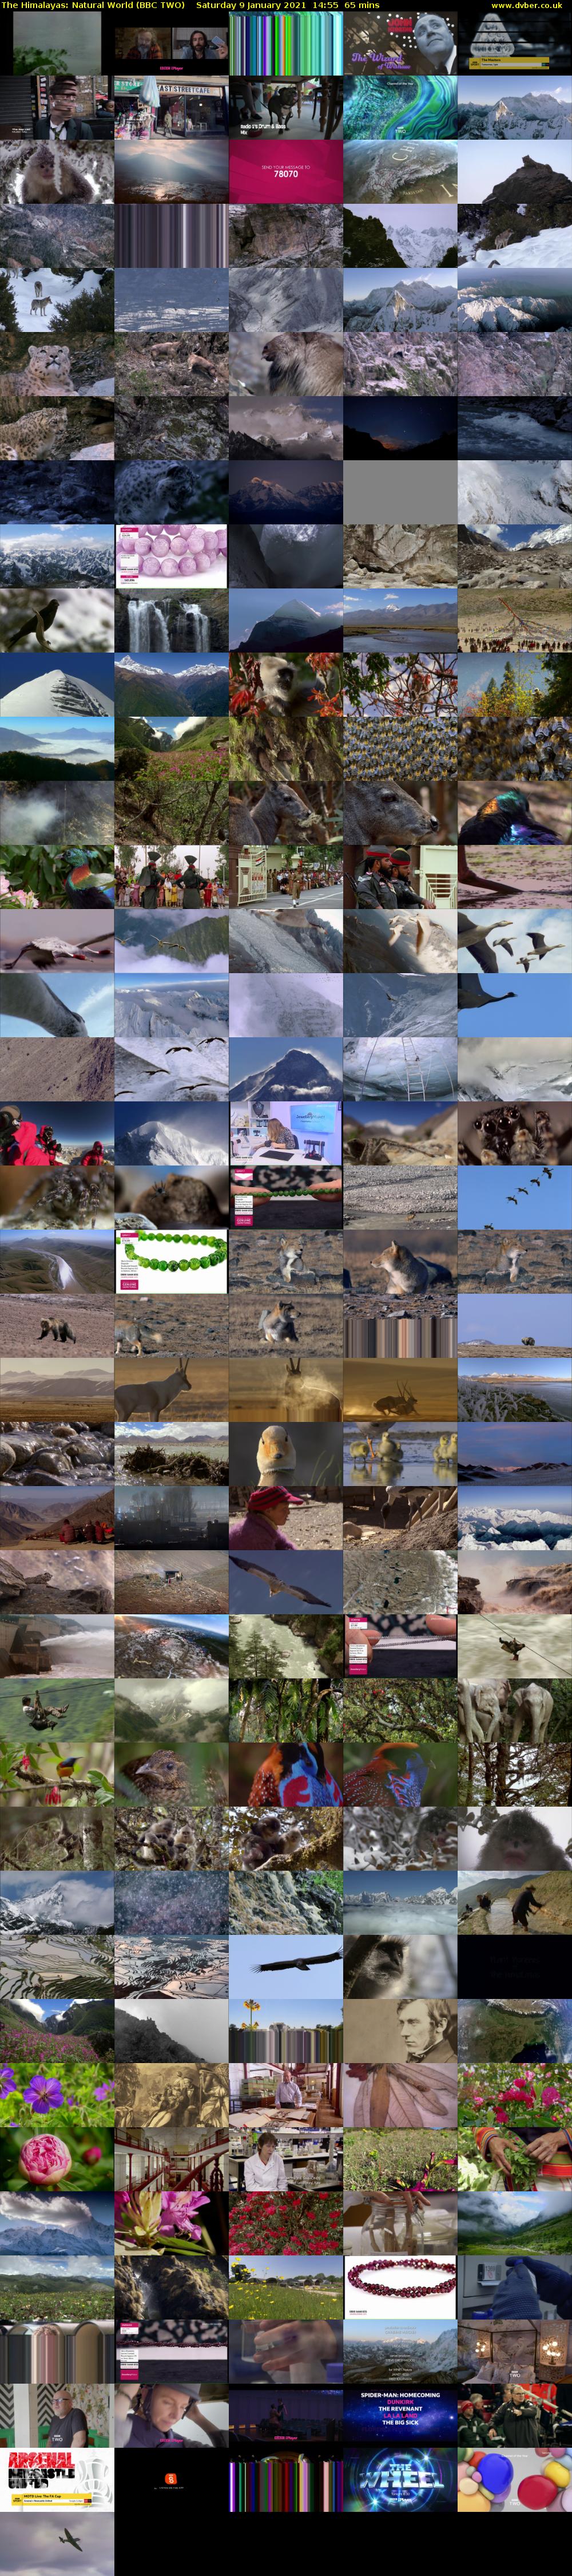 The Himalayas: Natural World (BBC TWO) Saturday 9 January 2021 14:55 - 16:00